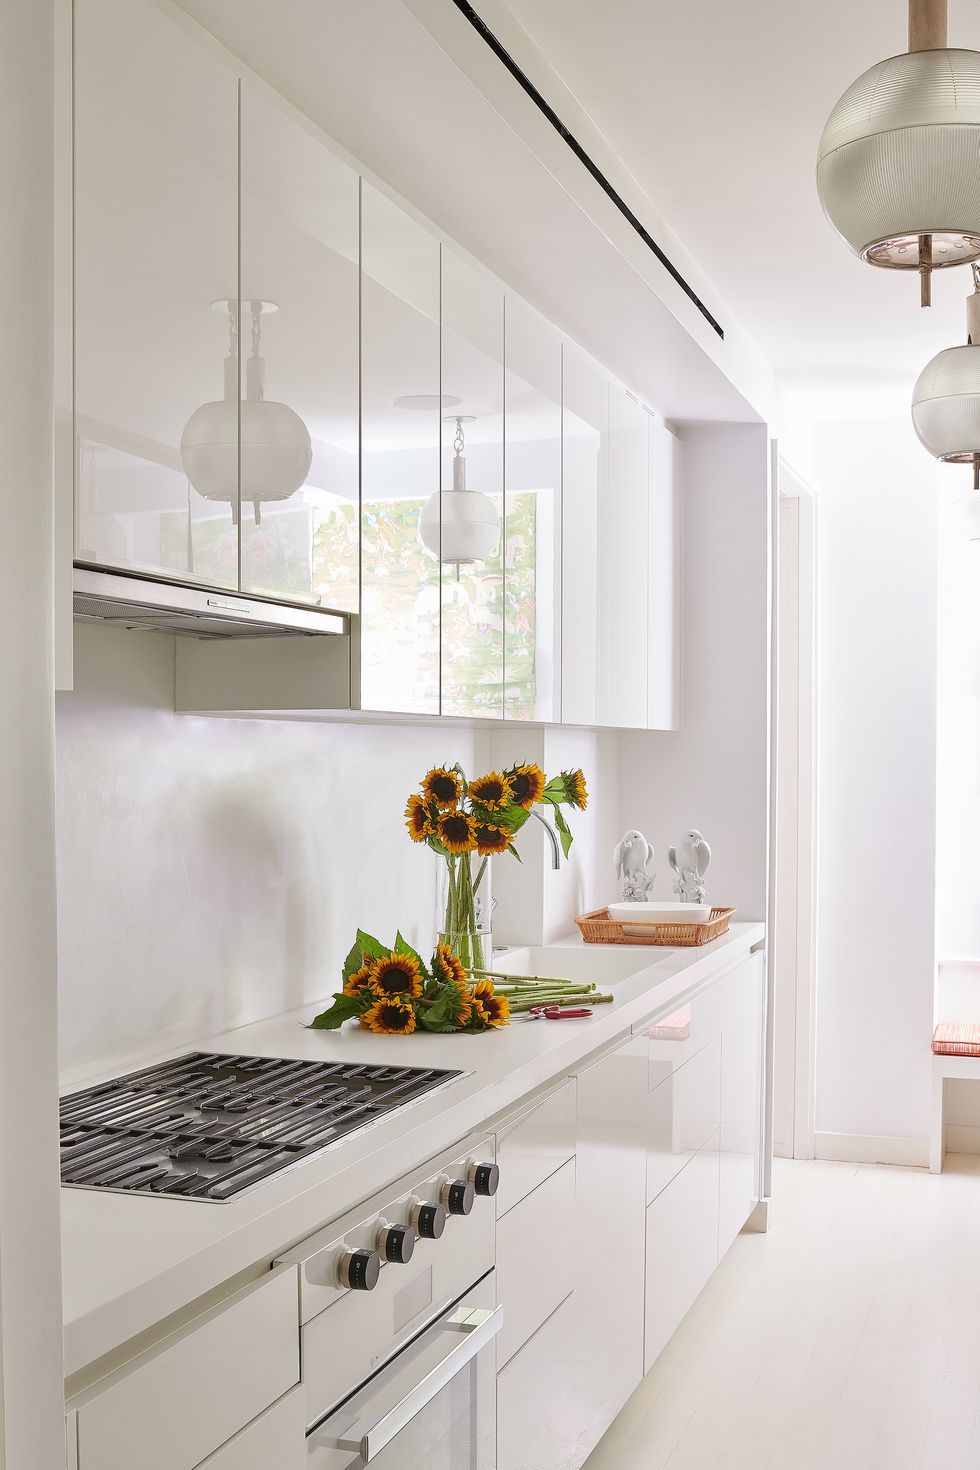 95 kitchen design ideas - remodeling ideas for interior design